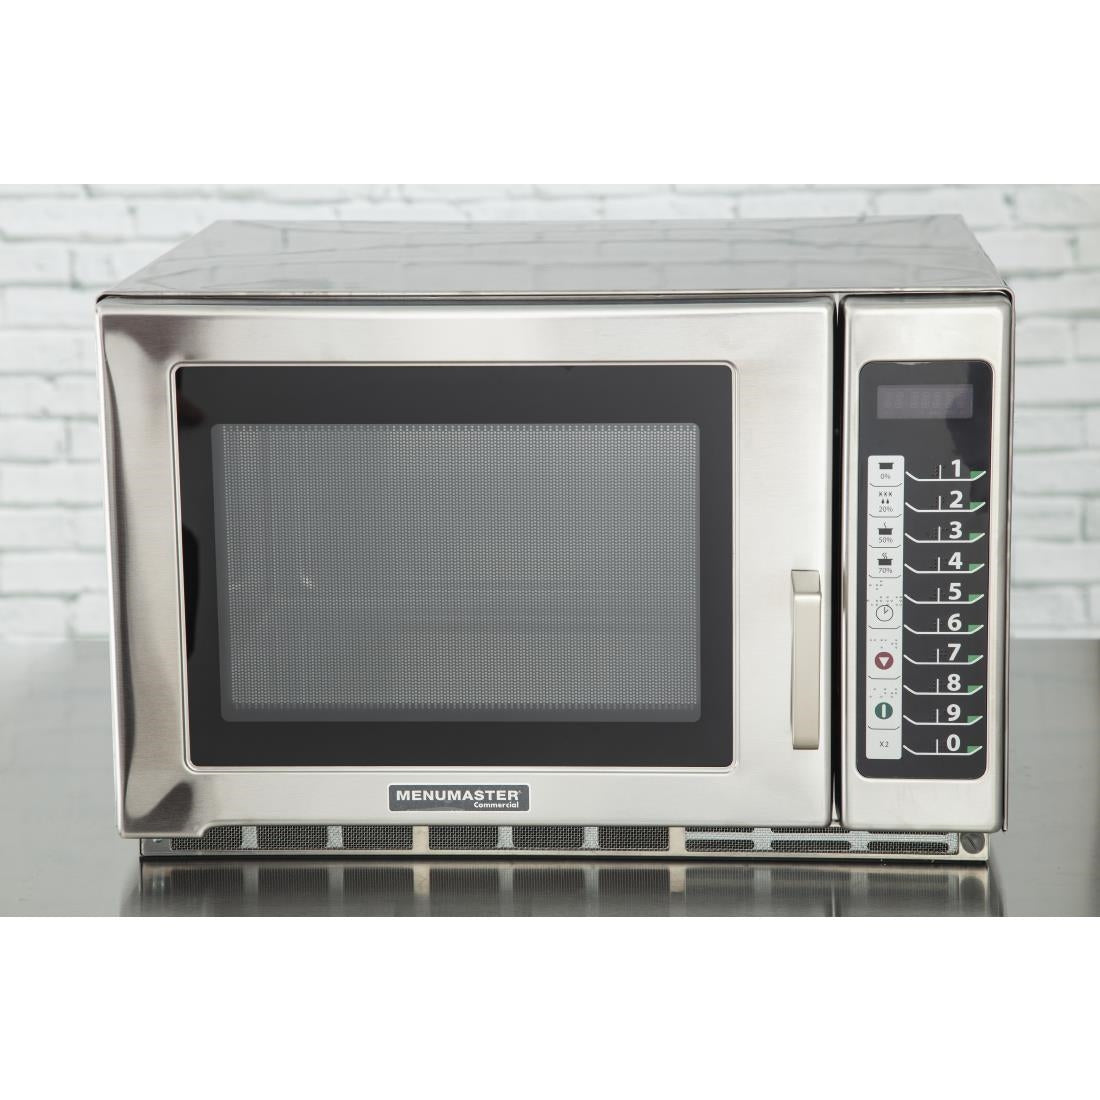 Menumaster Large Capacity Microwave RFS518TS JD Catering Equipment Solutions Ltd